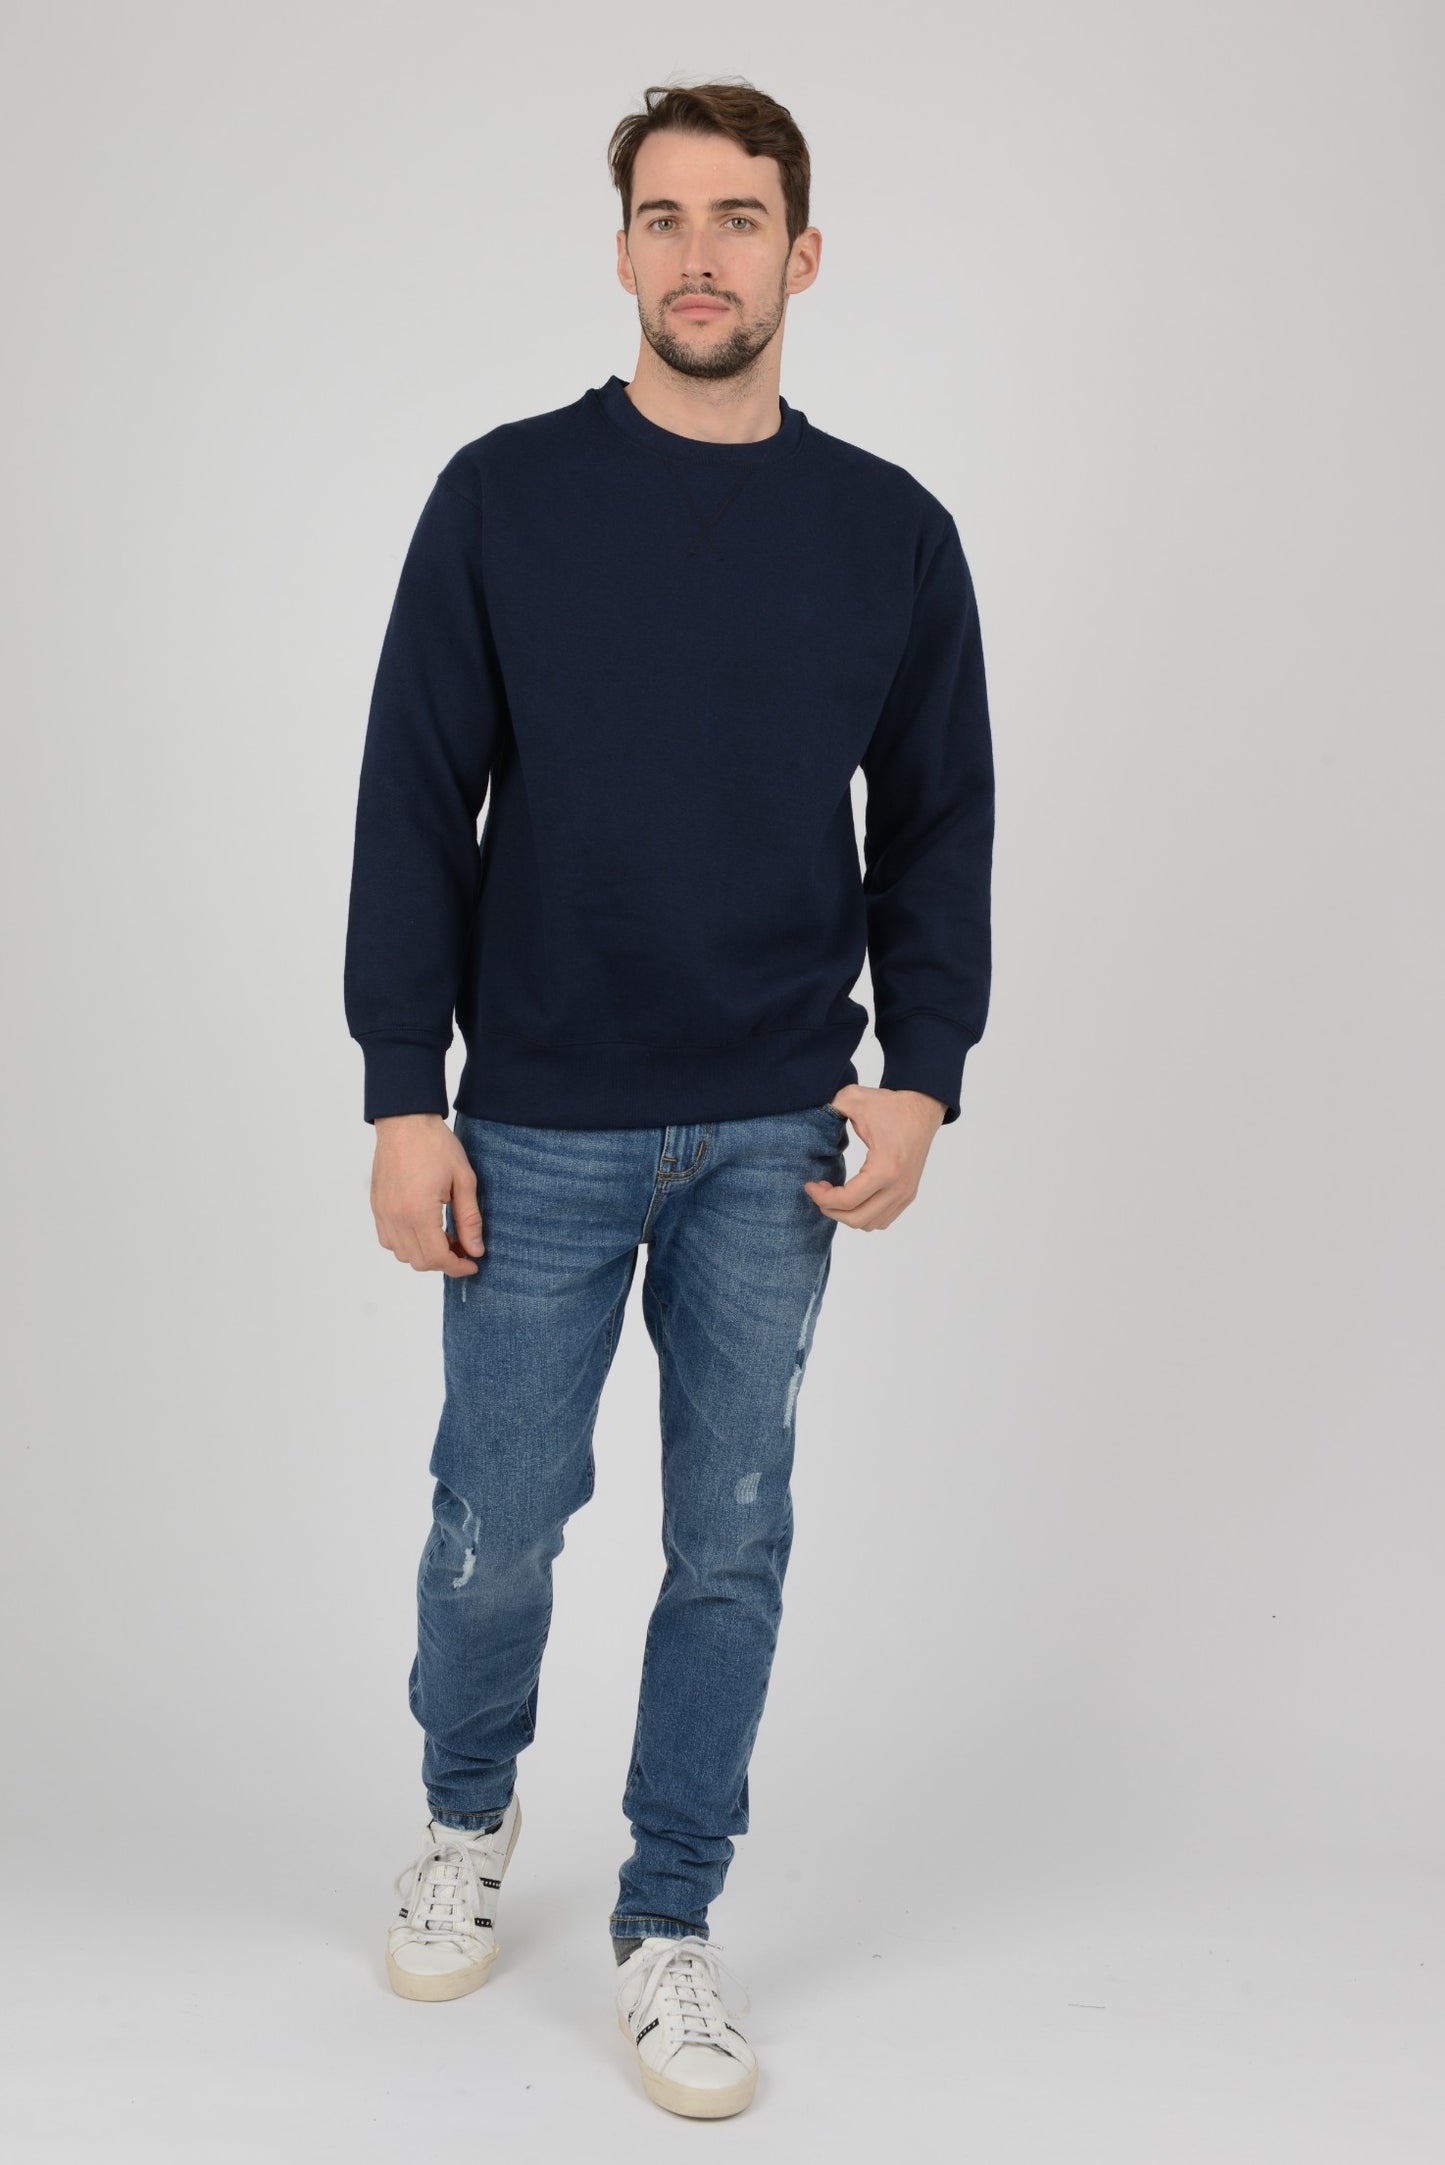 Mens-Plain-Fleece-Sweatshirt-Jersey-Indigo-Blue